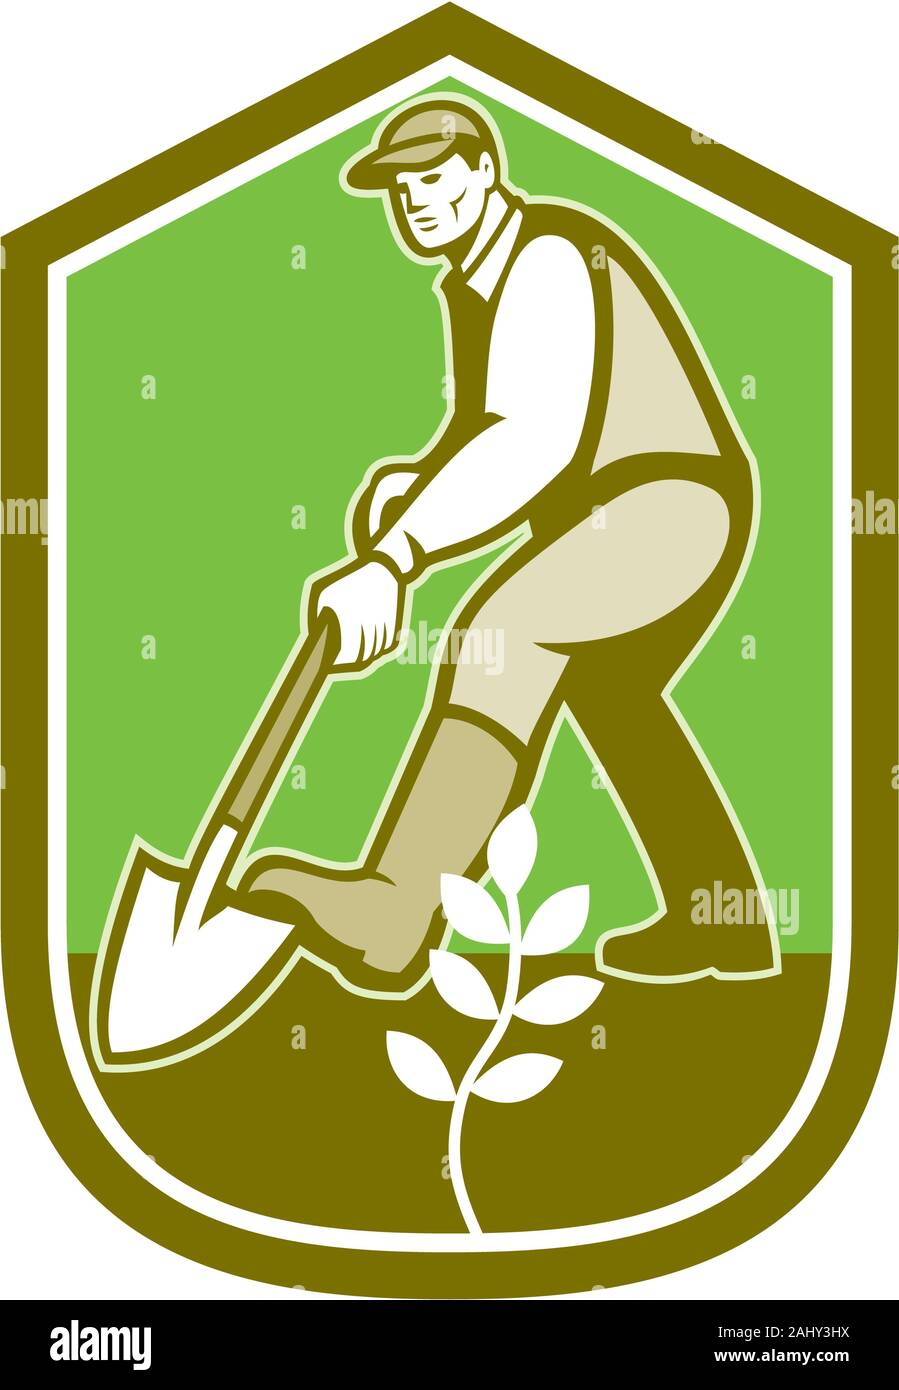 Digging man cartoon illustration hi-res stock photography and images - Alamy